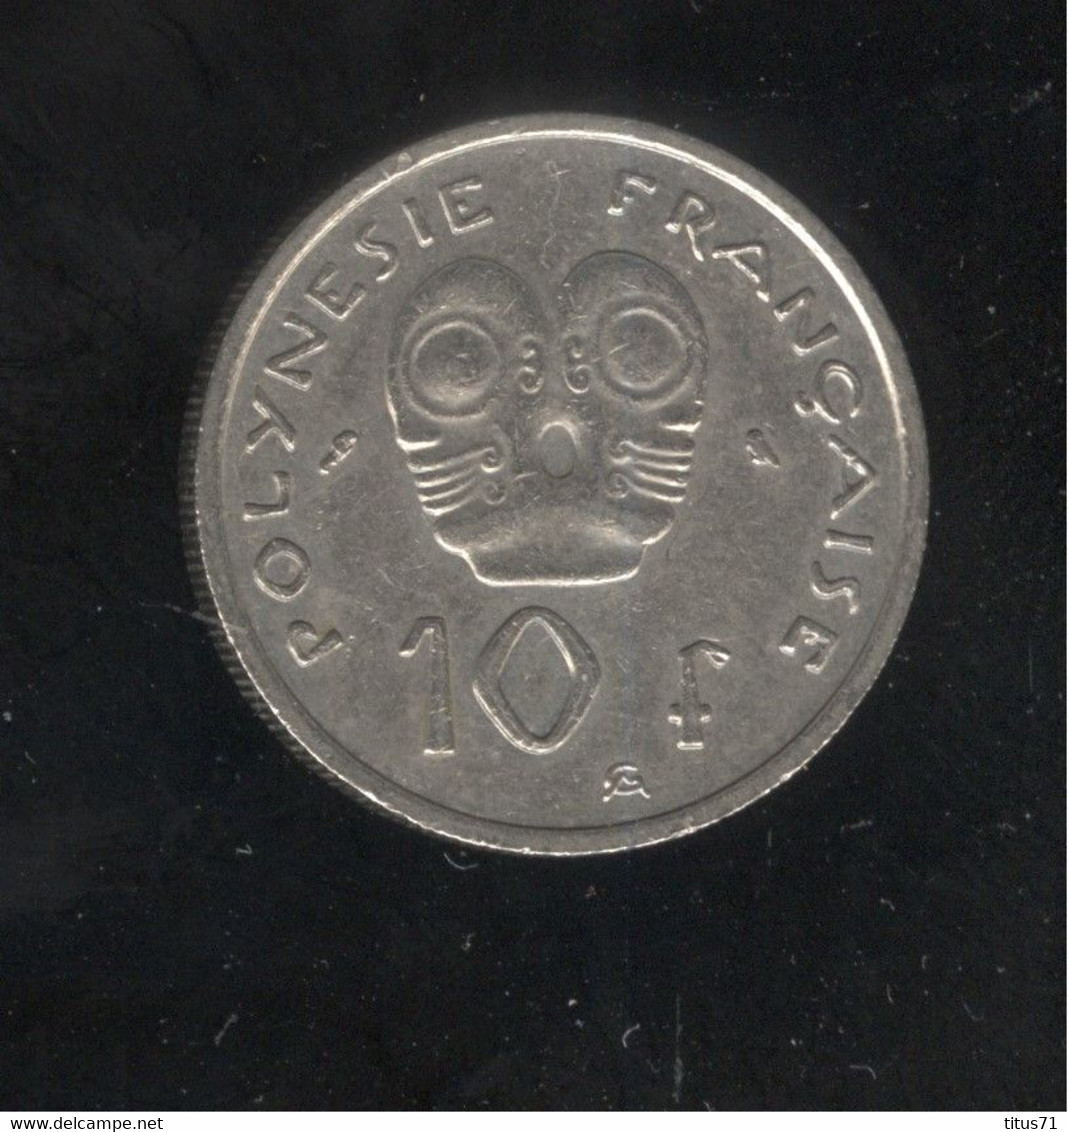 10 Francs Polynésie Française 1967 - Französisch-Polynesien